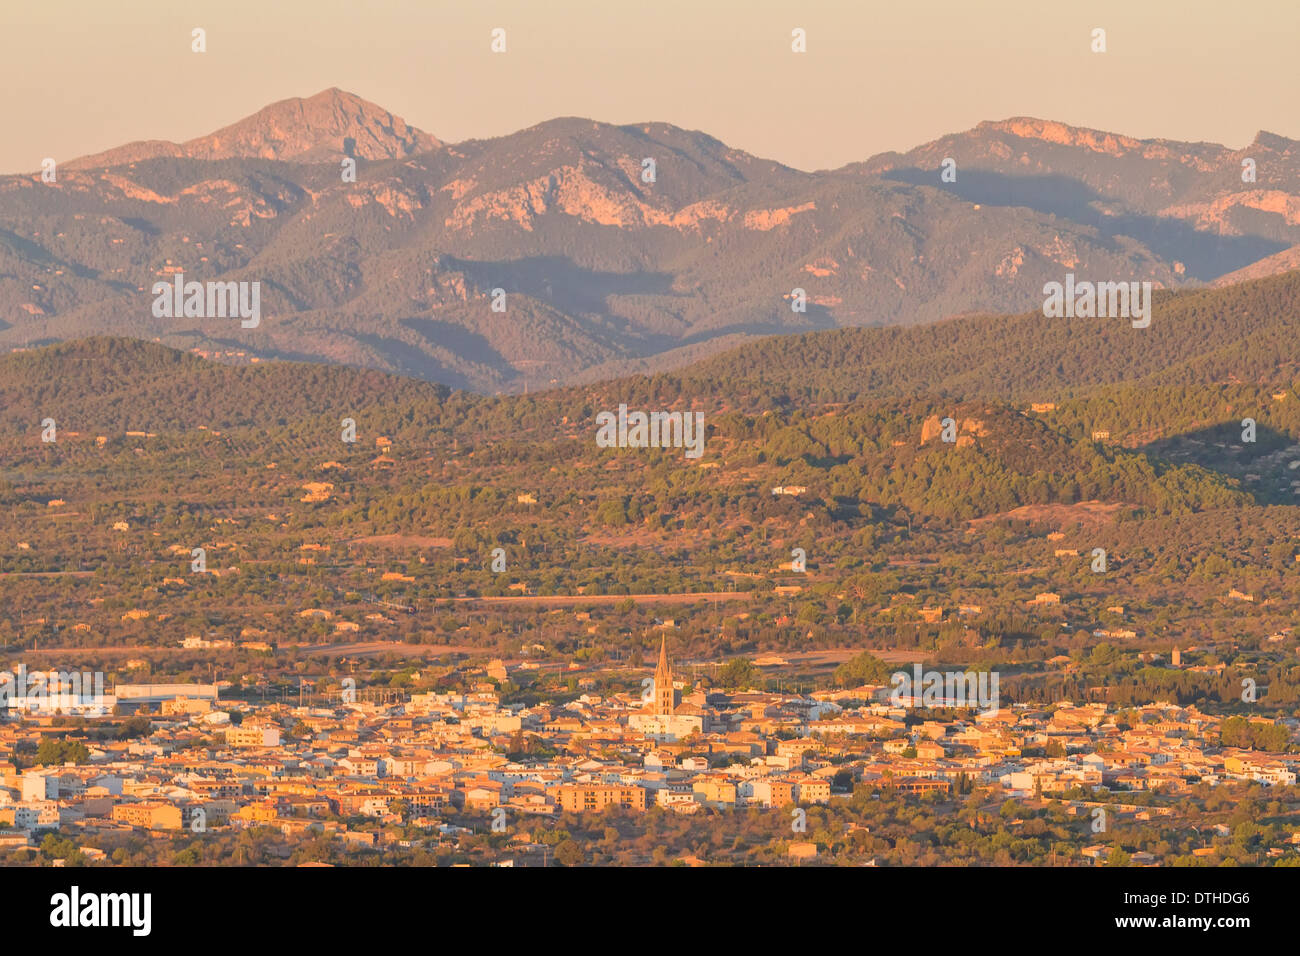 La mattina presto vista aerea di Binissalem città. Montagne Tramuntana in background. Maiorca, isole Baleari, Spagna Foto Stock